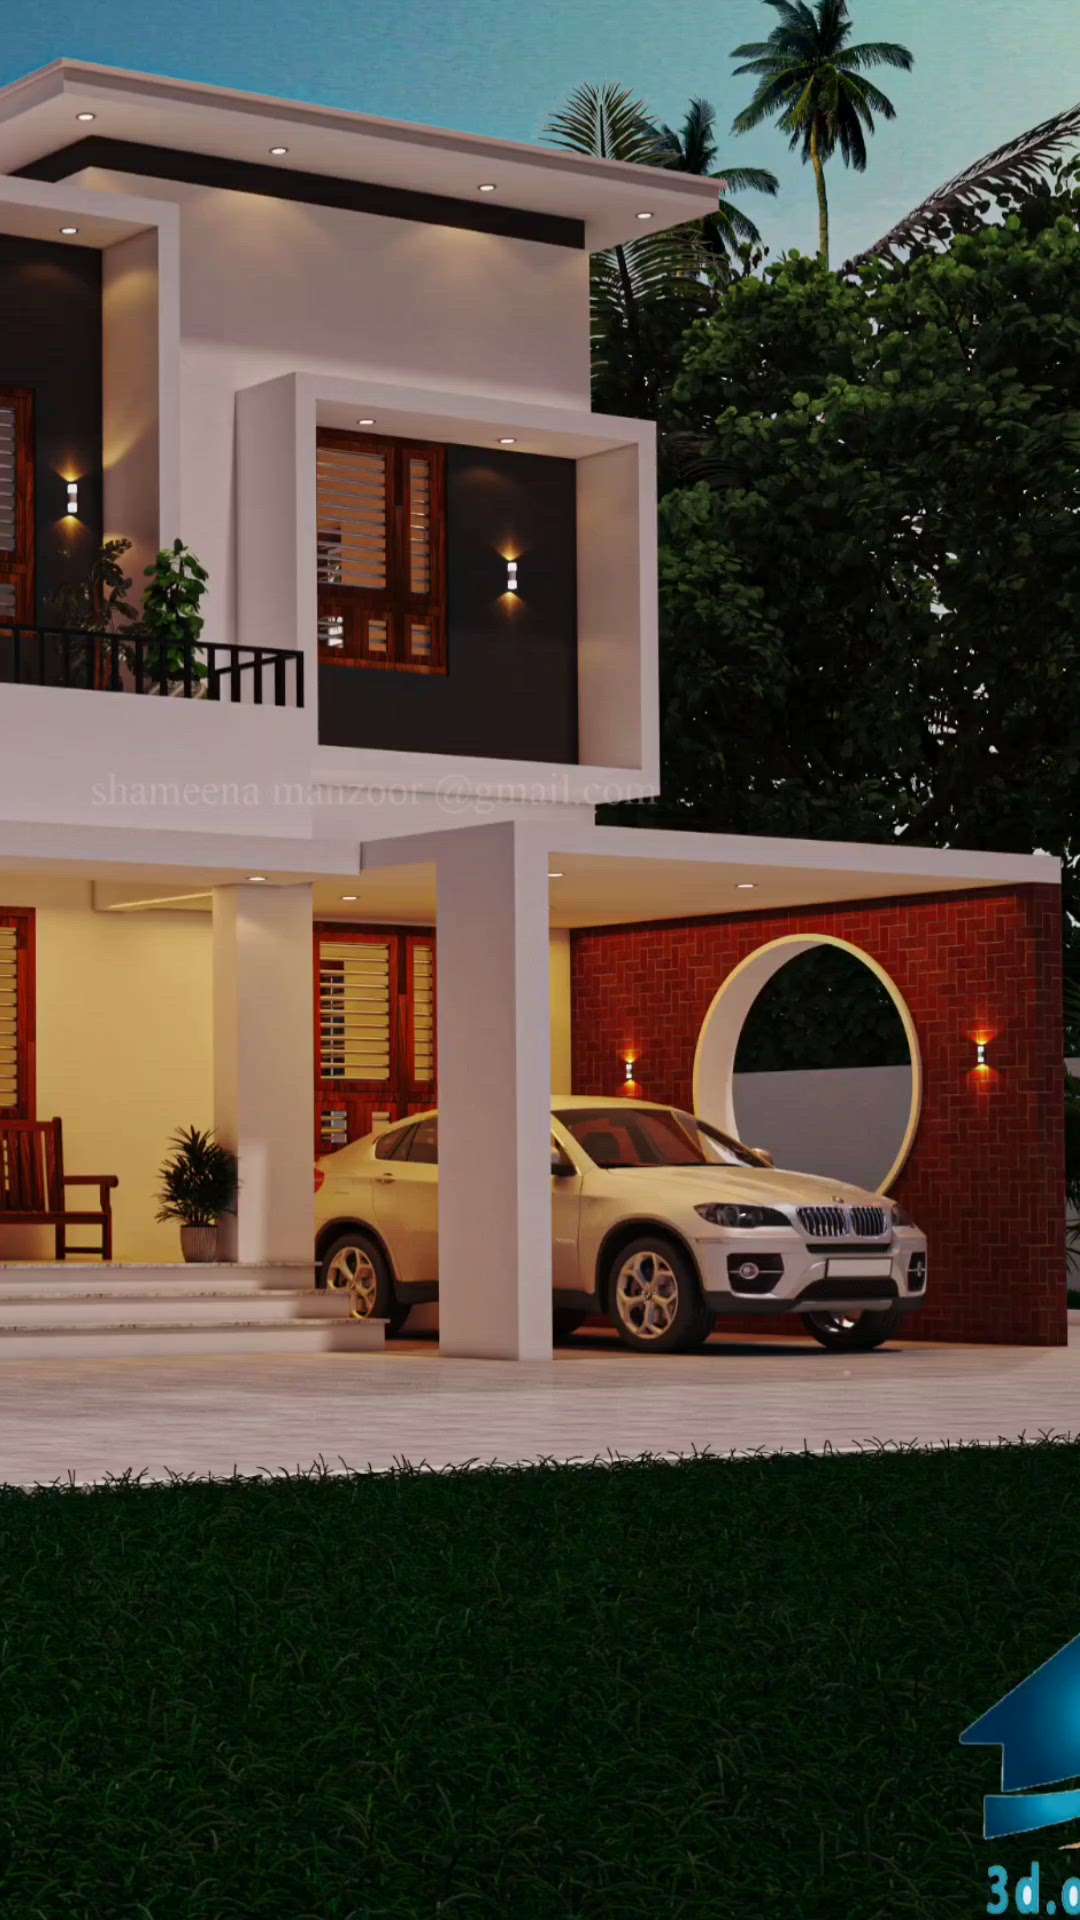 Proposed 3D_Design For mr _ Nithin noble.  @ Cherpunkal 

( നിങ്ങളുടെ കയ്യിലുള്ള പ്ലാൻ അനുസരിച്ചുള്ള 3d ഡിസൈൻ ചെയ്യാൻ contact ചെയ്യൂ......)
Contact : 9567748403

#kerala #residence #3ddesigns #online3d #keralahome #architecture #architecture_hunter #architecturephotography #architecturedesign #architecturelovers ##keraladesign #malappuram #palakkad #calicut #kannur #kollam #thrissur #edappal #wayanad #manjeri #chemmad #indianarchitecture